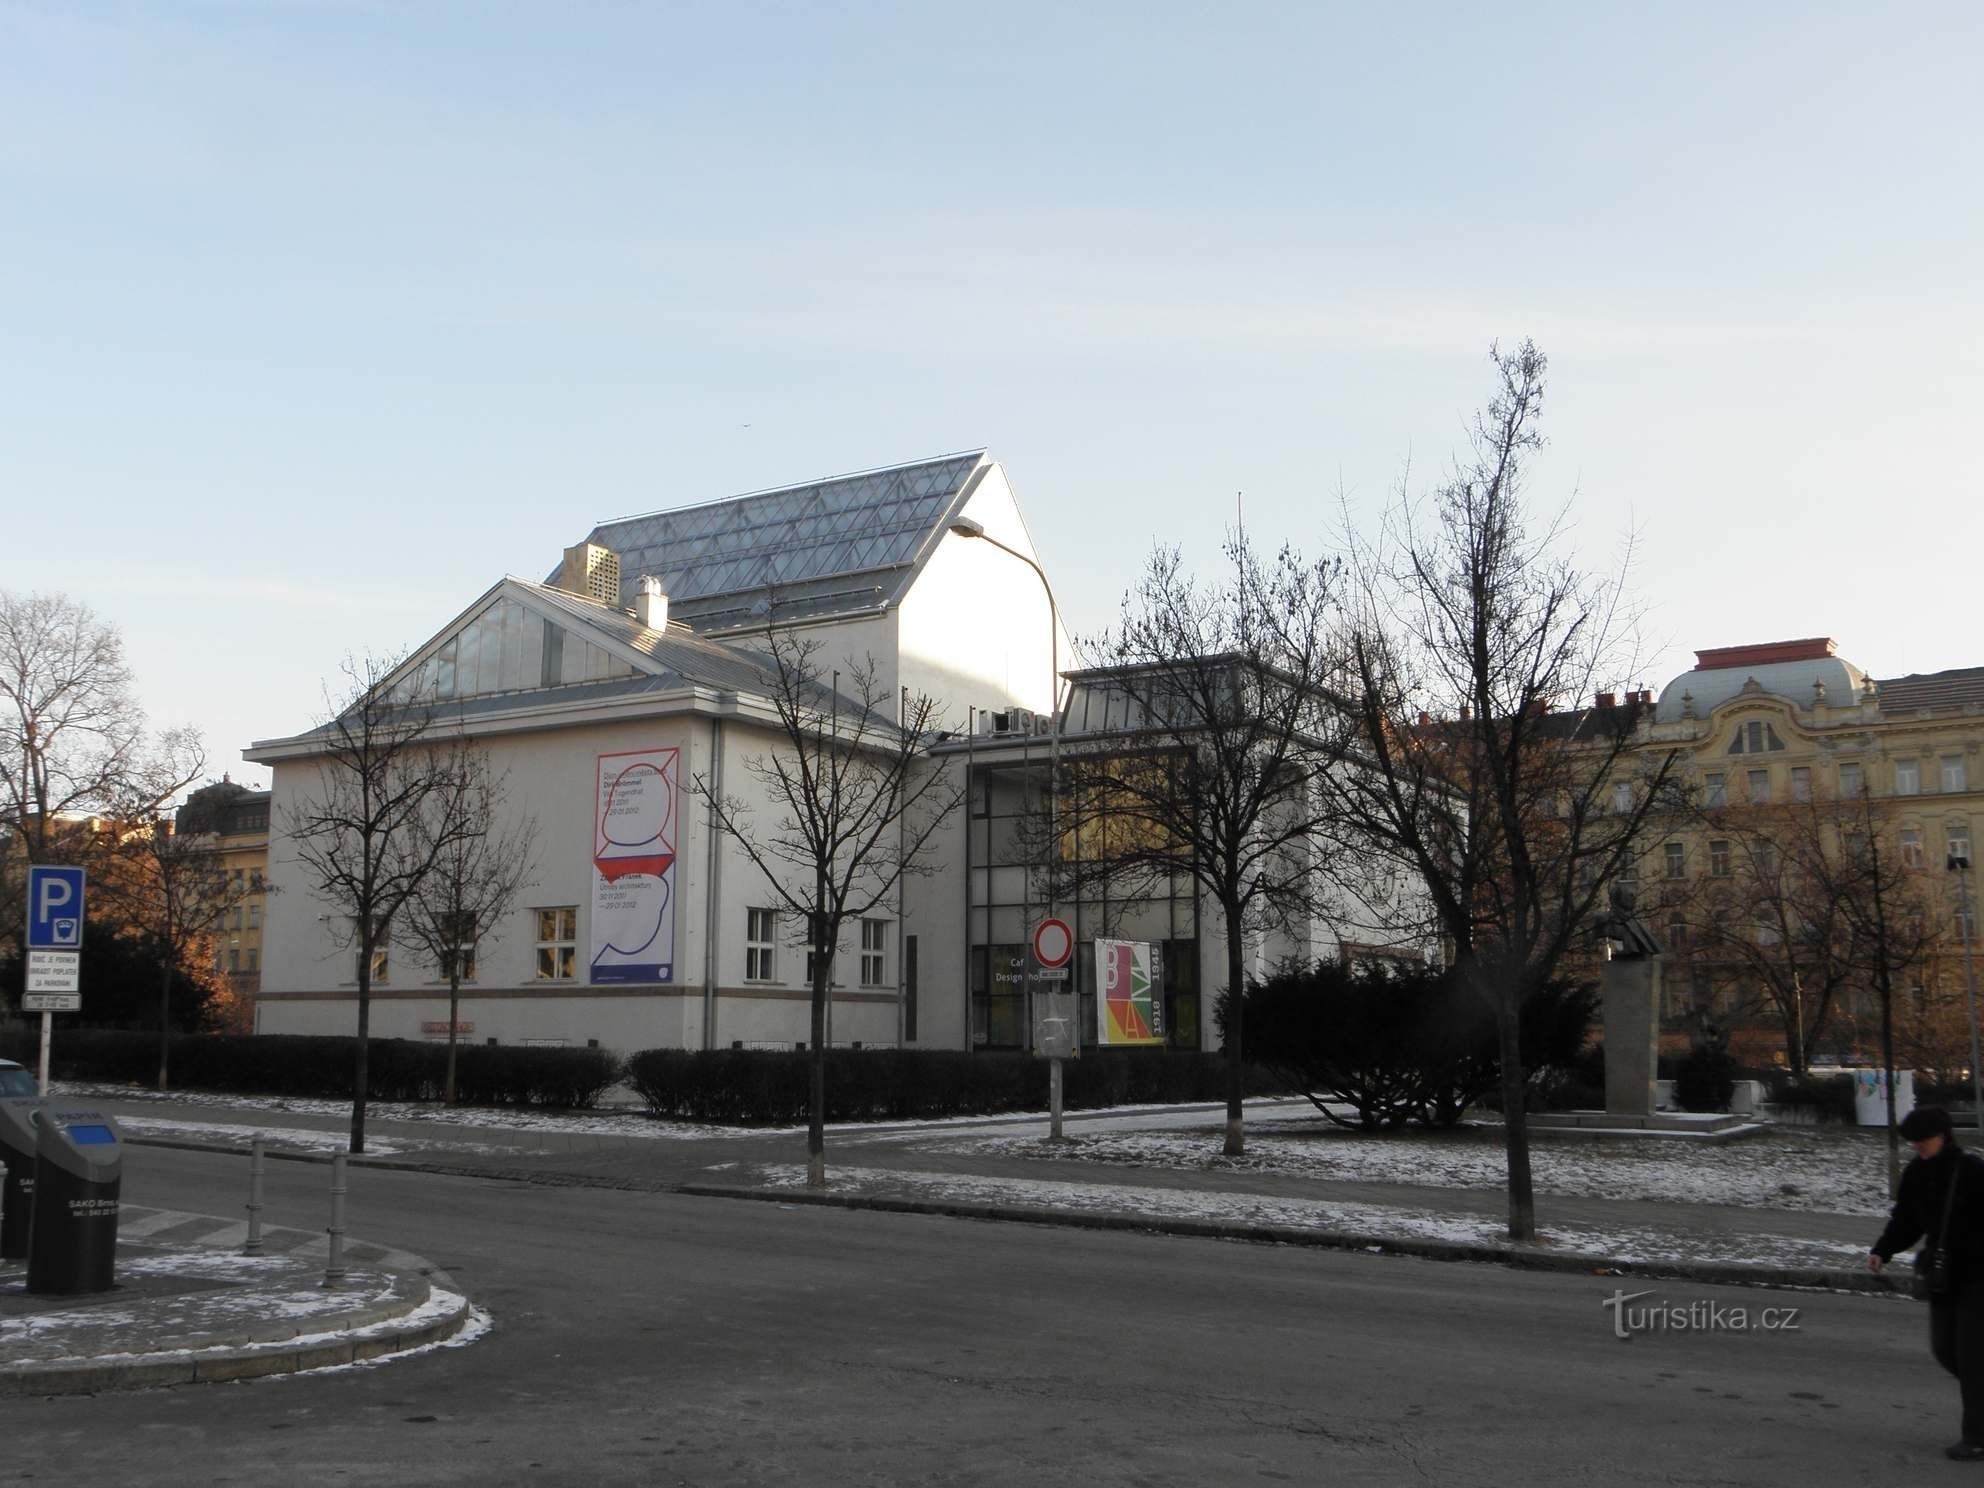 House of Art of the City of Brno - 10.2.2012 Φεβρουαρίου XNUMX